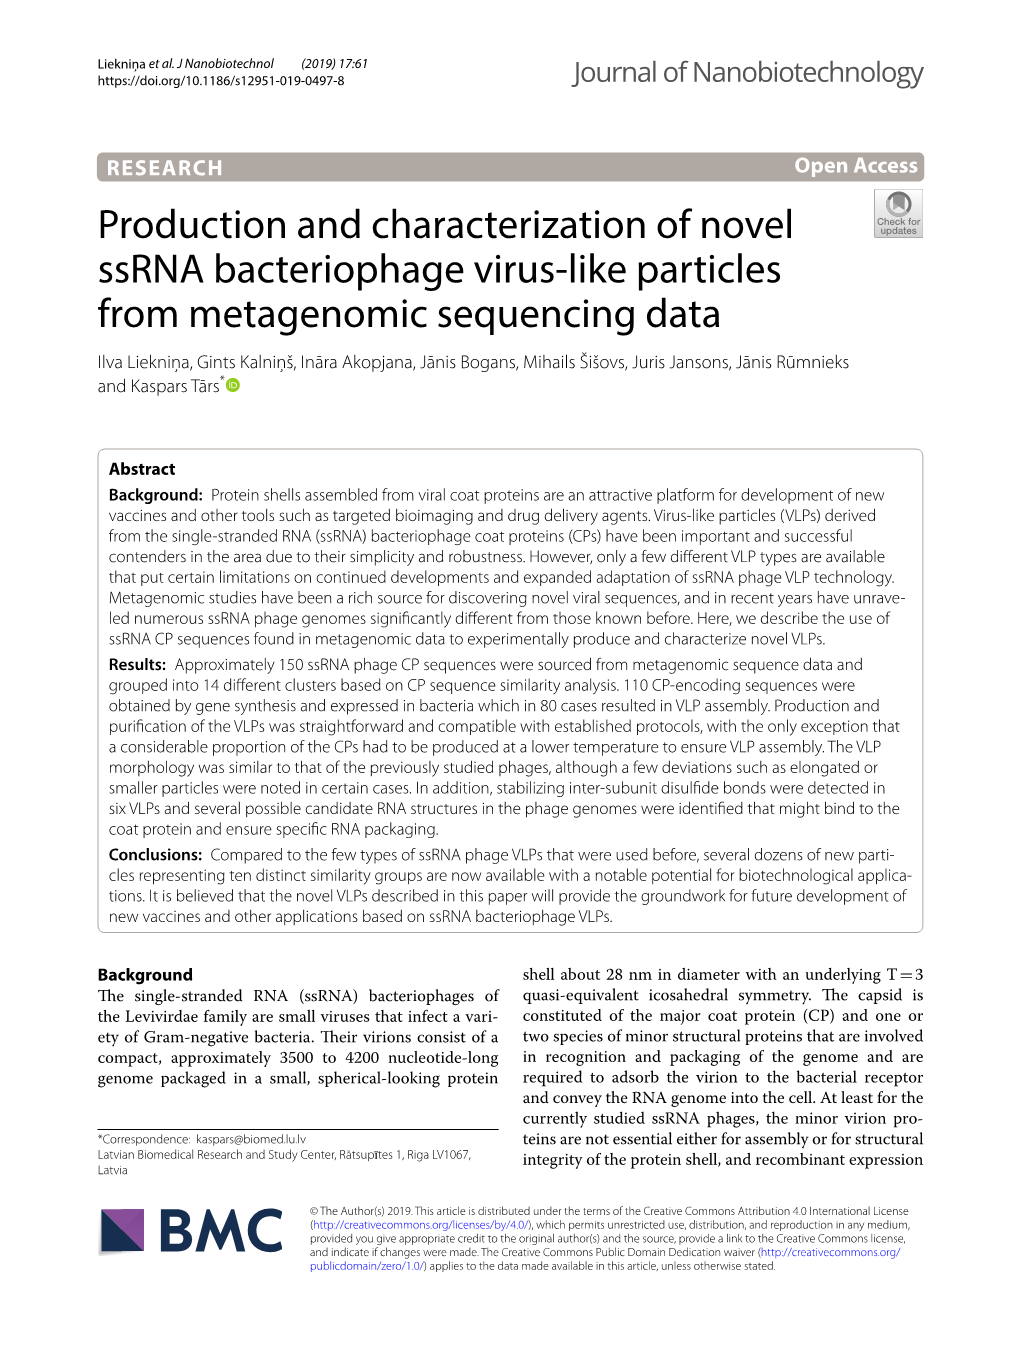 Production and Characterization of Novel Ssrna Bacteriophage Virus